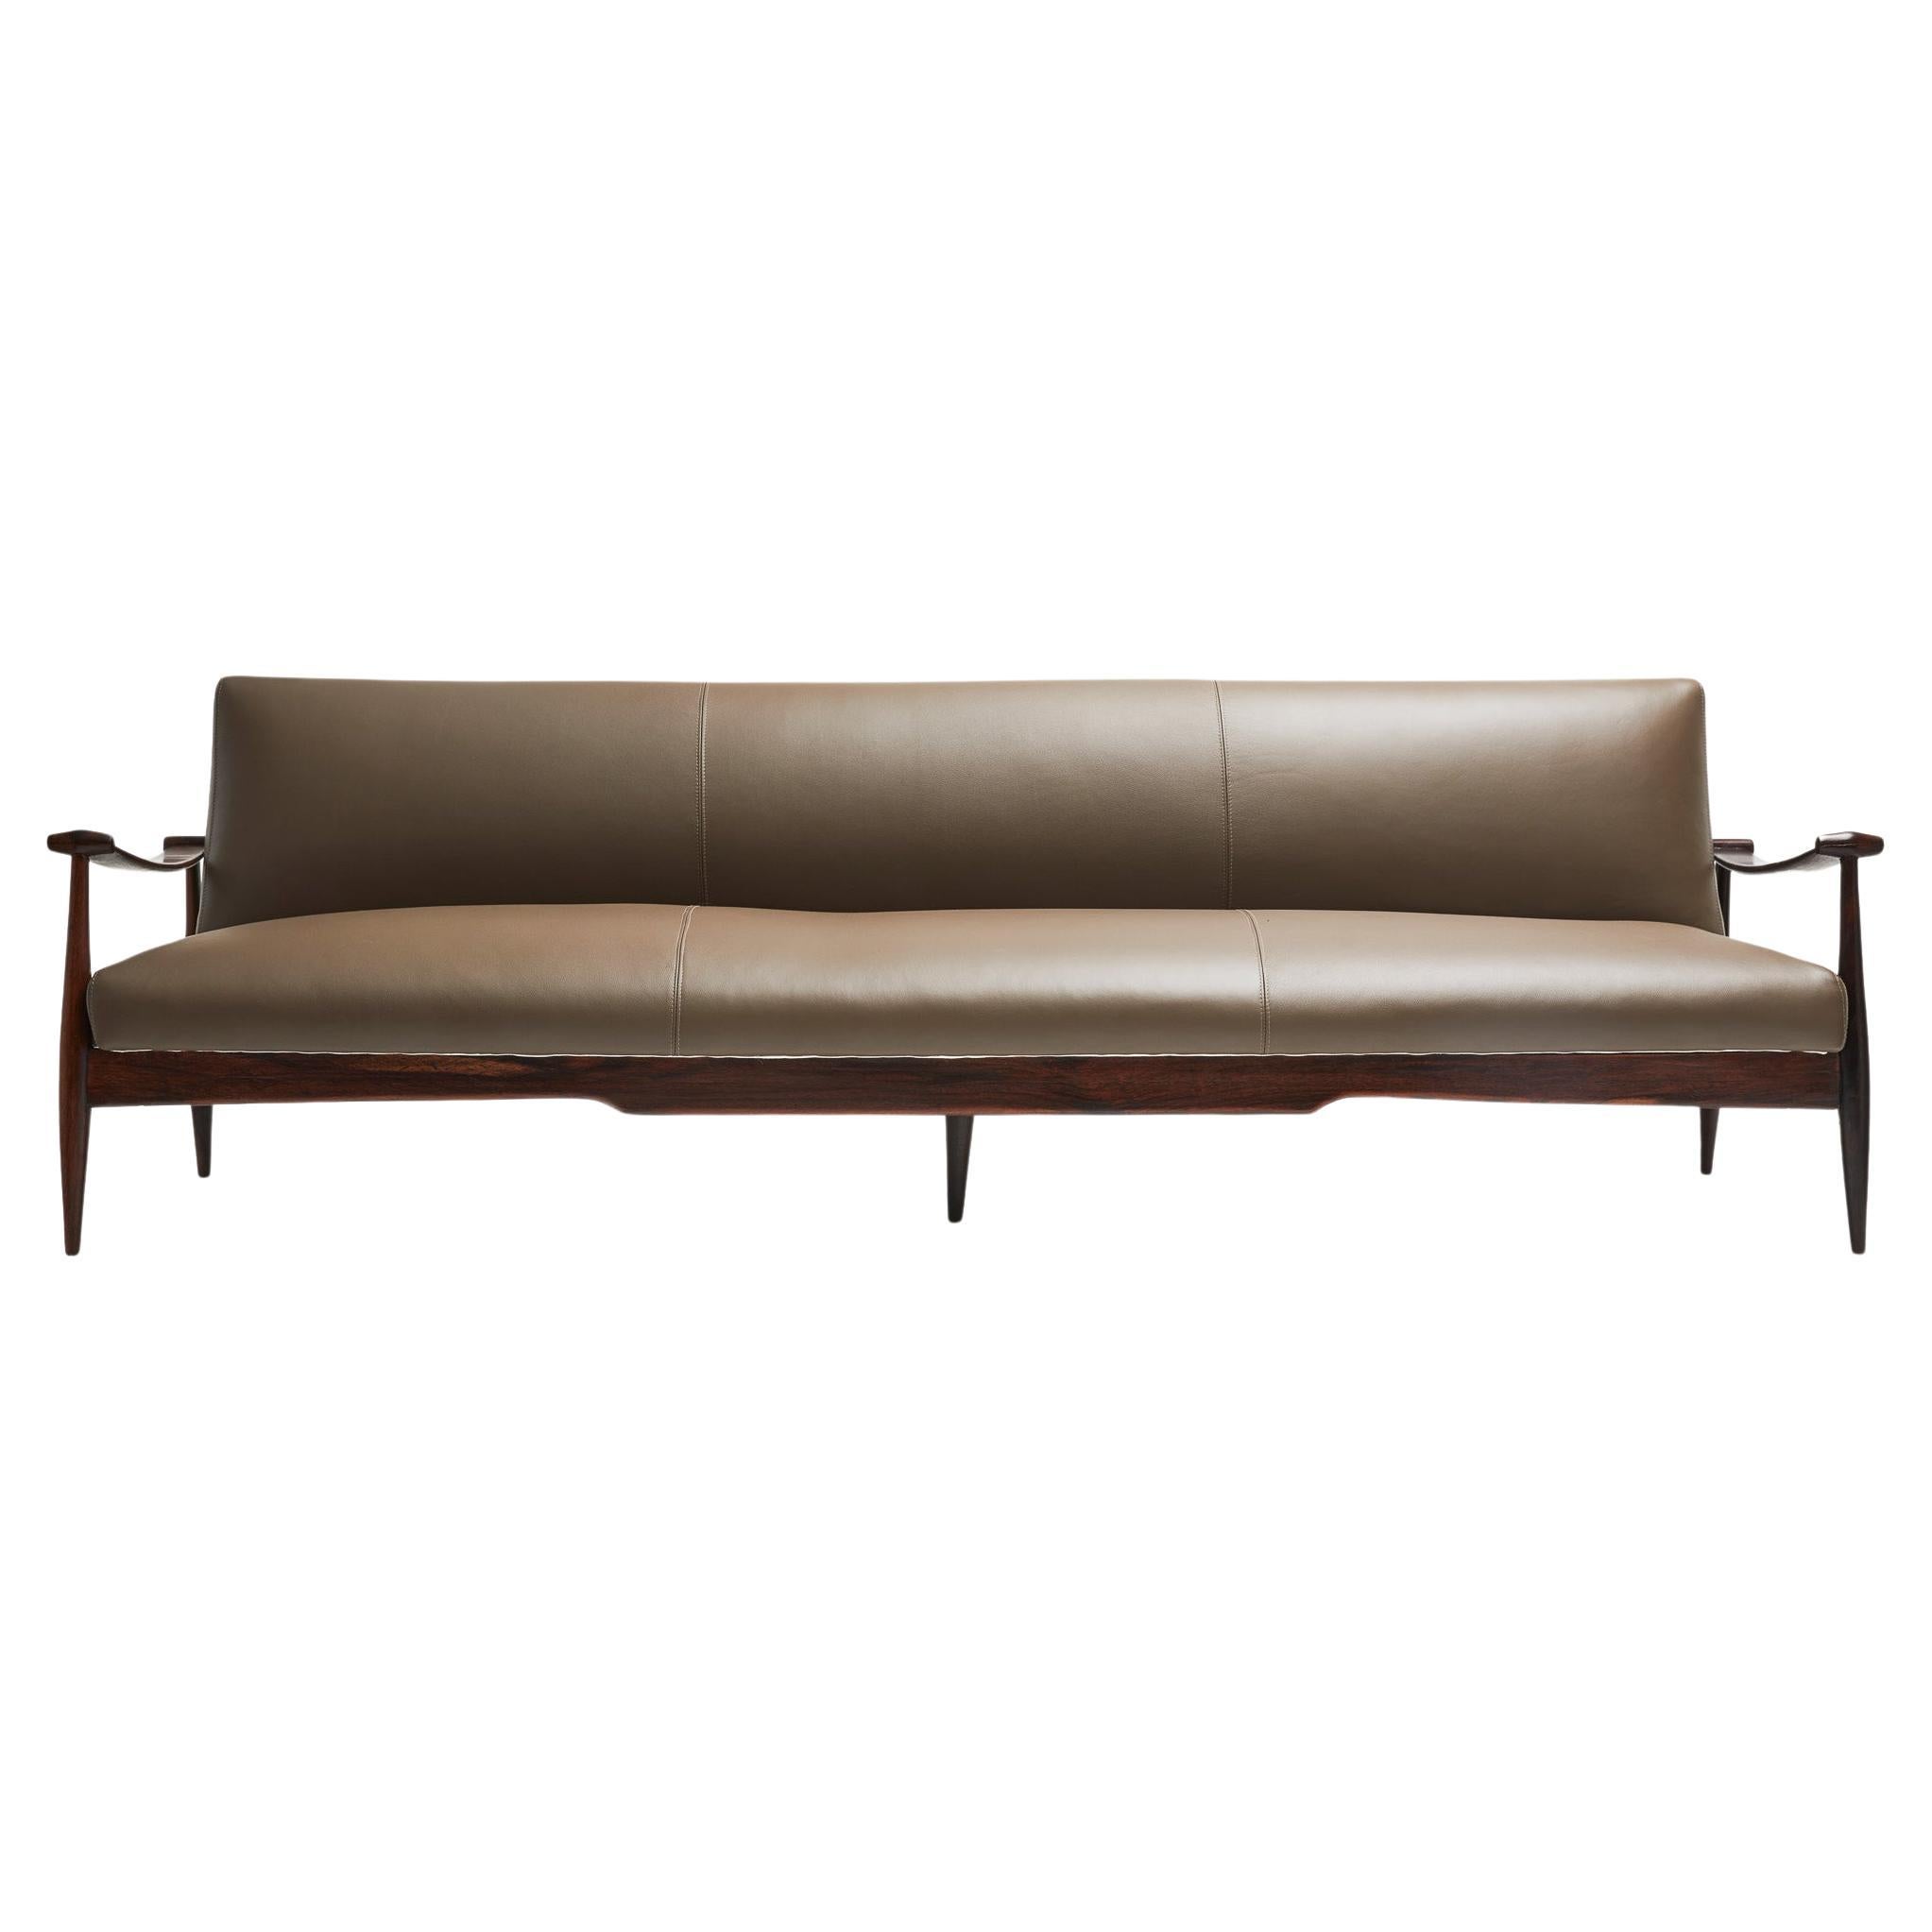 Brazilian Modern Sofa in Hardwood & Brown Leather by Liceu De Artes 1960 For Sale